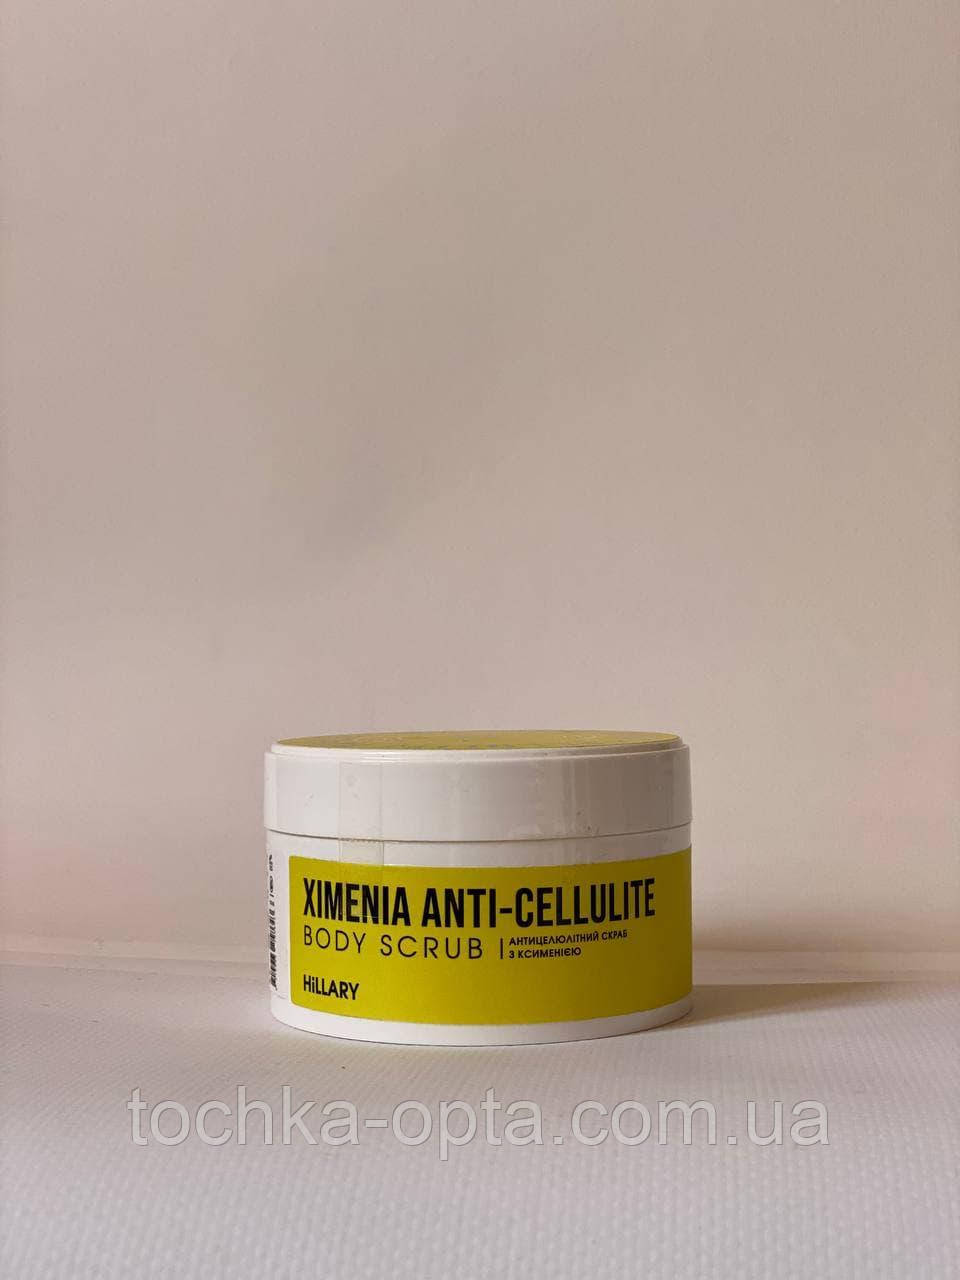 Антицелюлітний скраб з ксименією Hillary Хimenia Anti-cellulite Body Scrub, 200 г